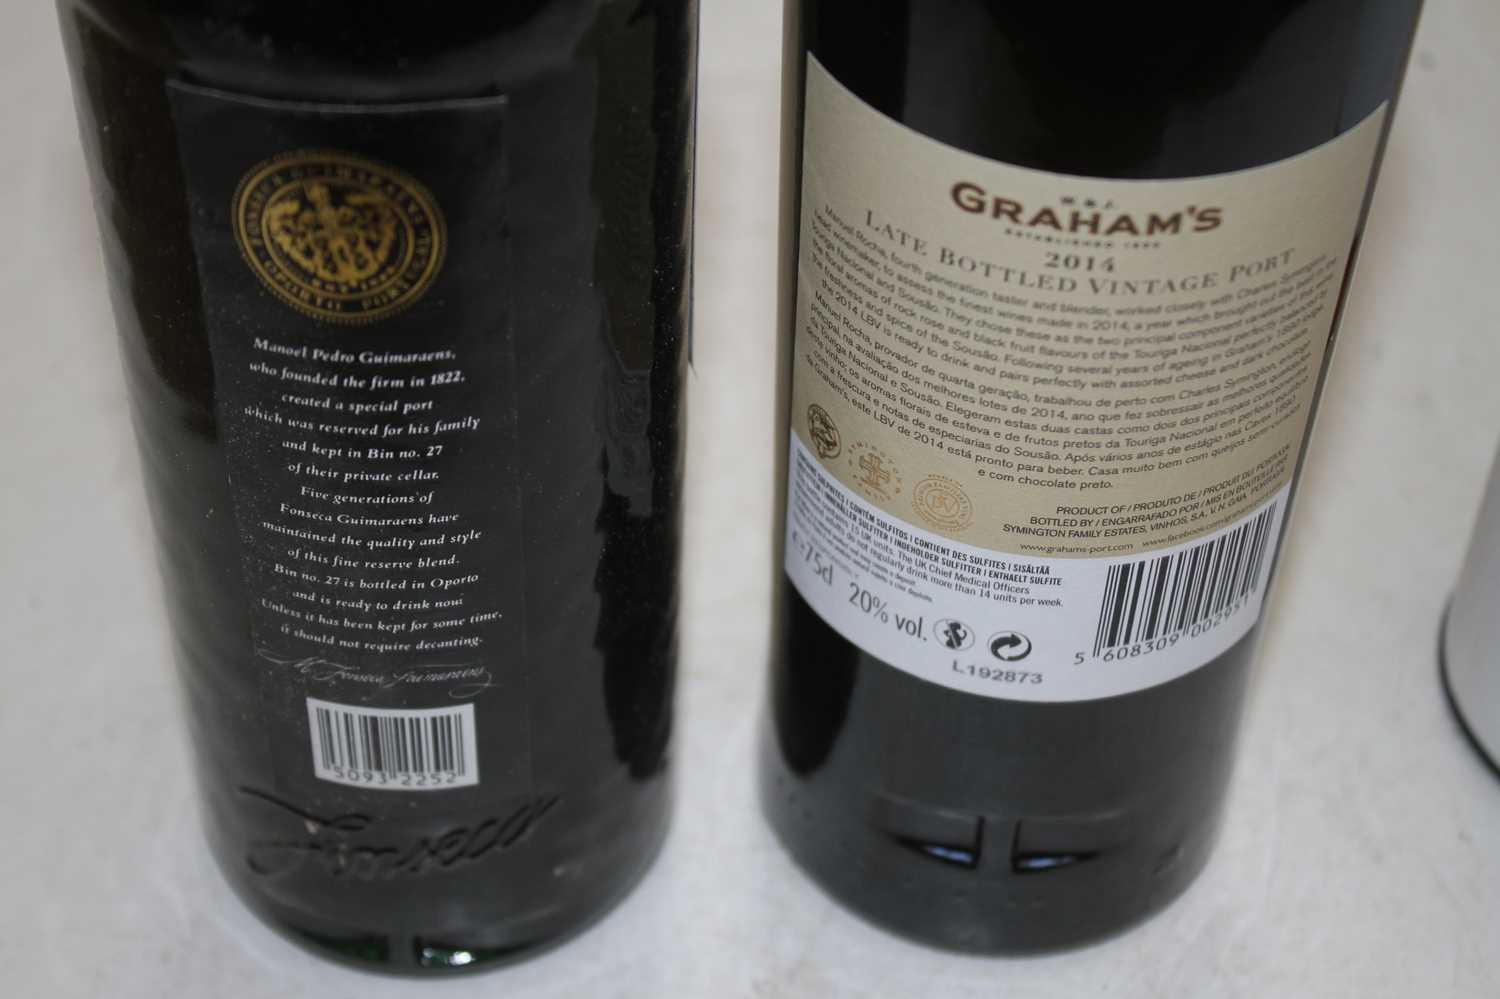 Fonseca Bin No.27 Fine Reserve port, one bottle (OWC); Graham's LBV port, 2014, one bottle in - Image 6 of 6